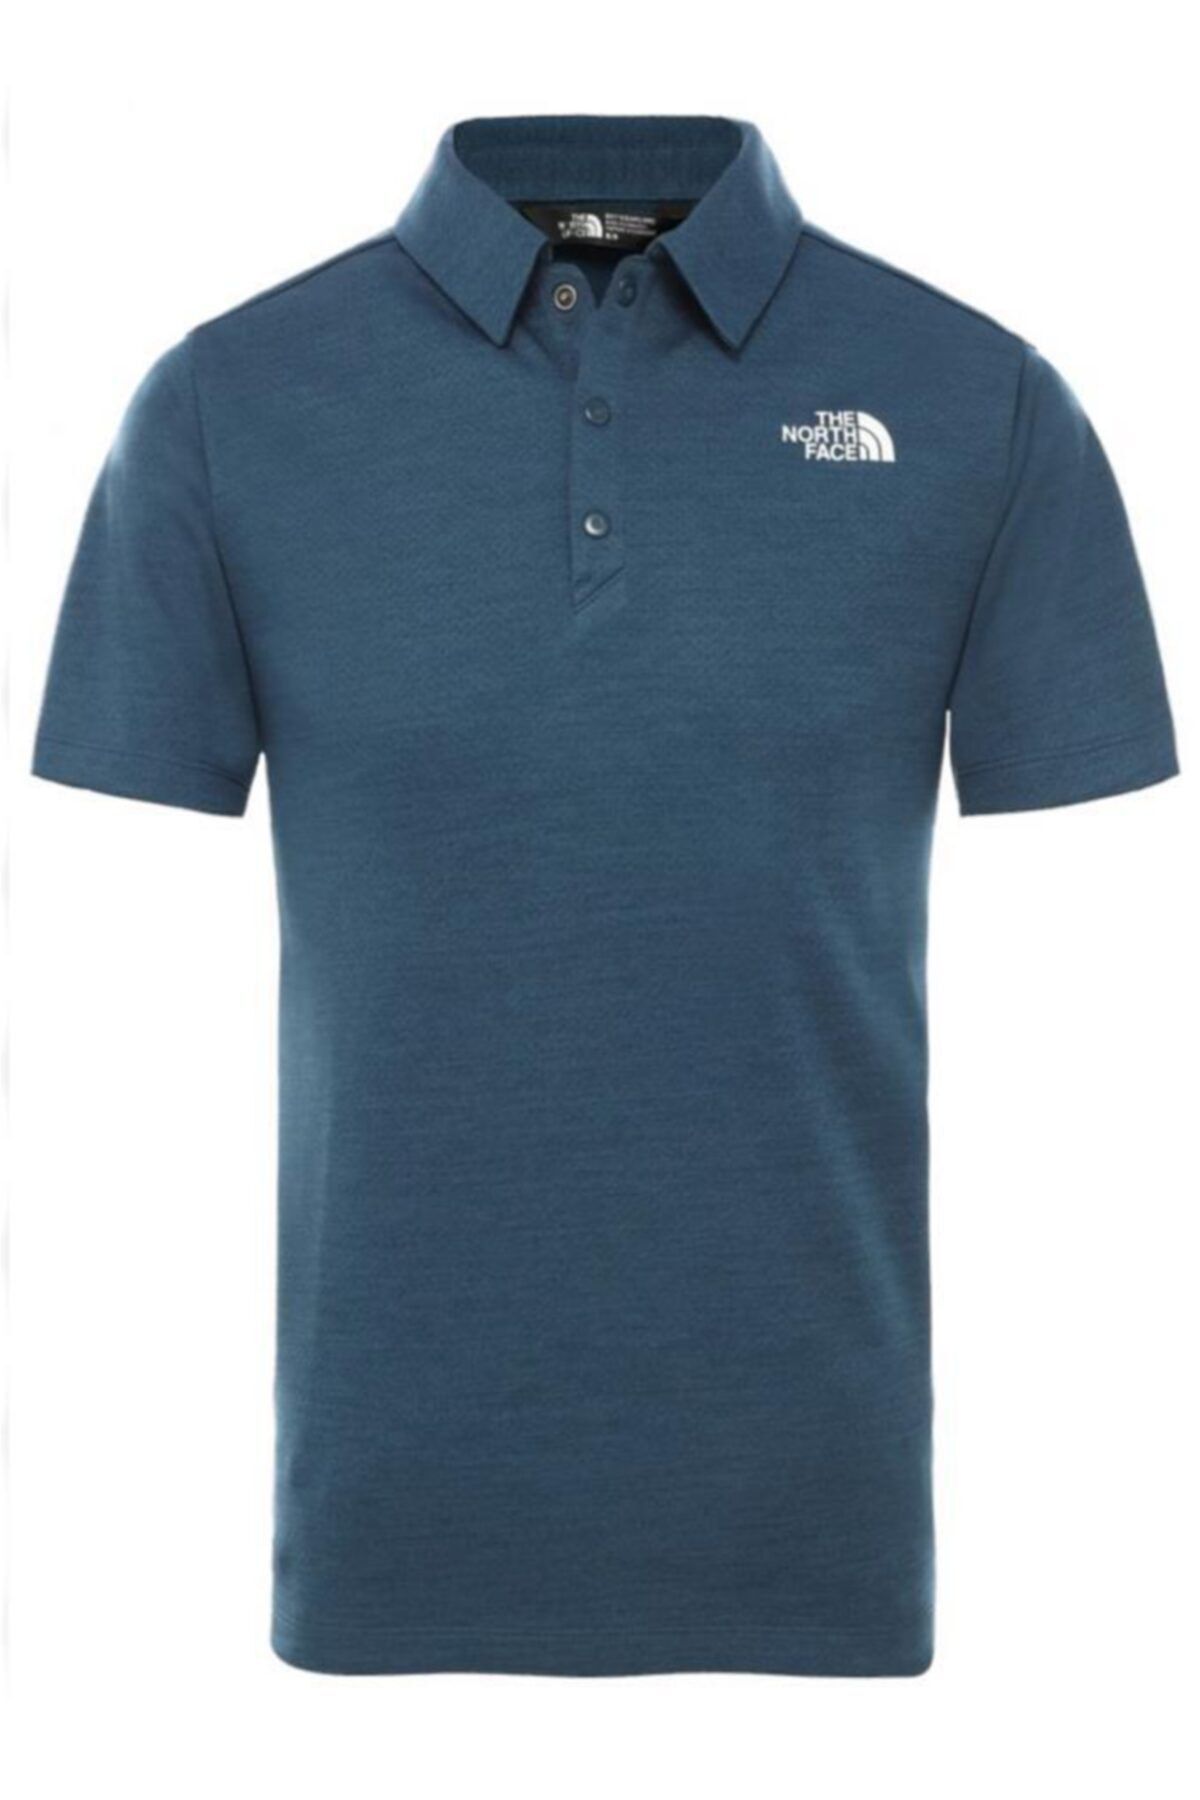 The North Face Erkek Çocuk Mavi Horizon Polo T-shirt